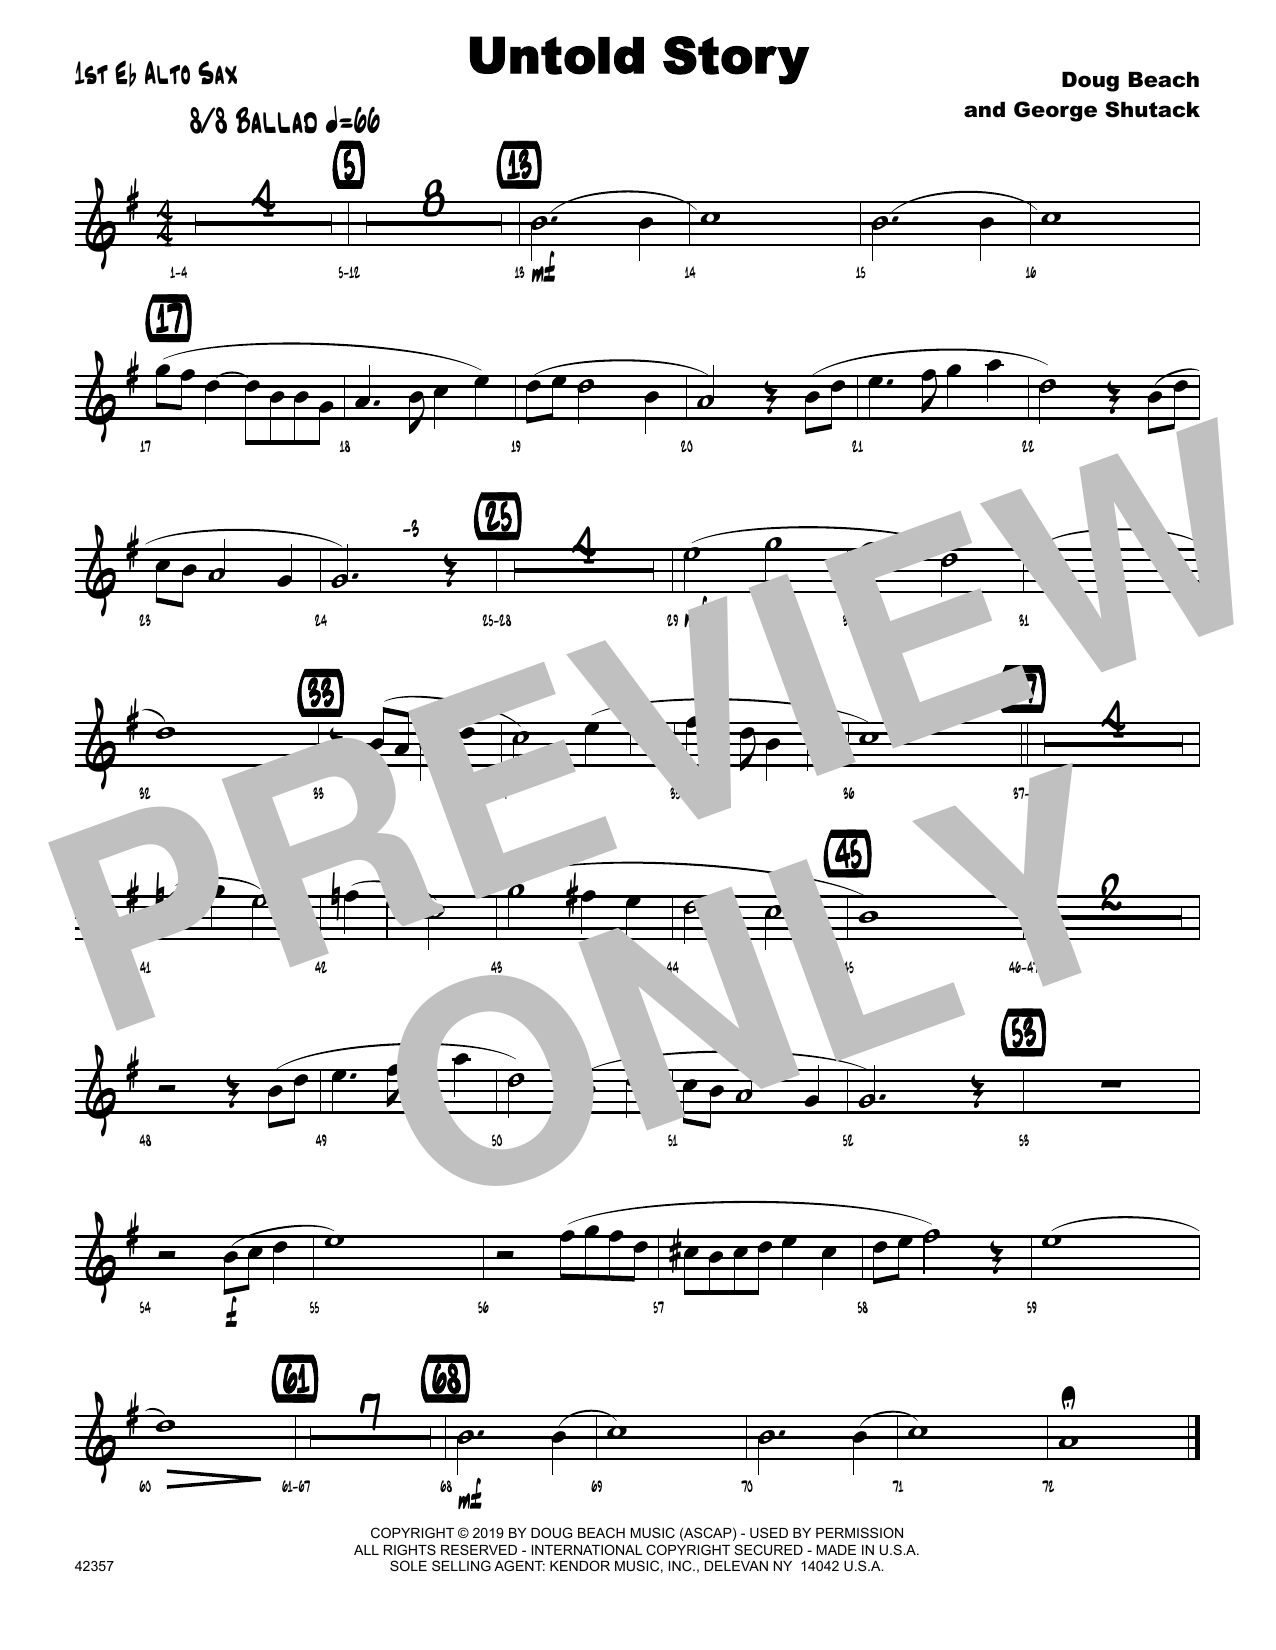 Download Doug Beach & George Shutack Untold Story - 1st Eb Alto Saxophone Sheet Music